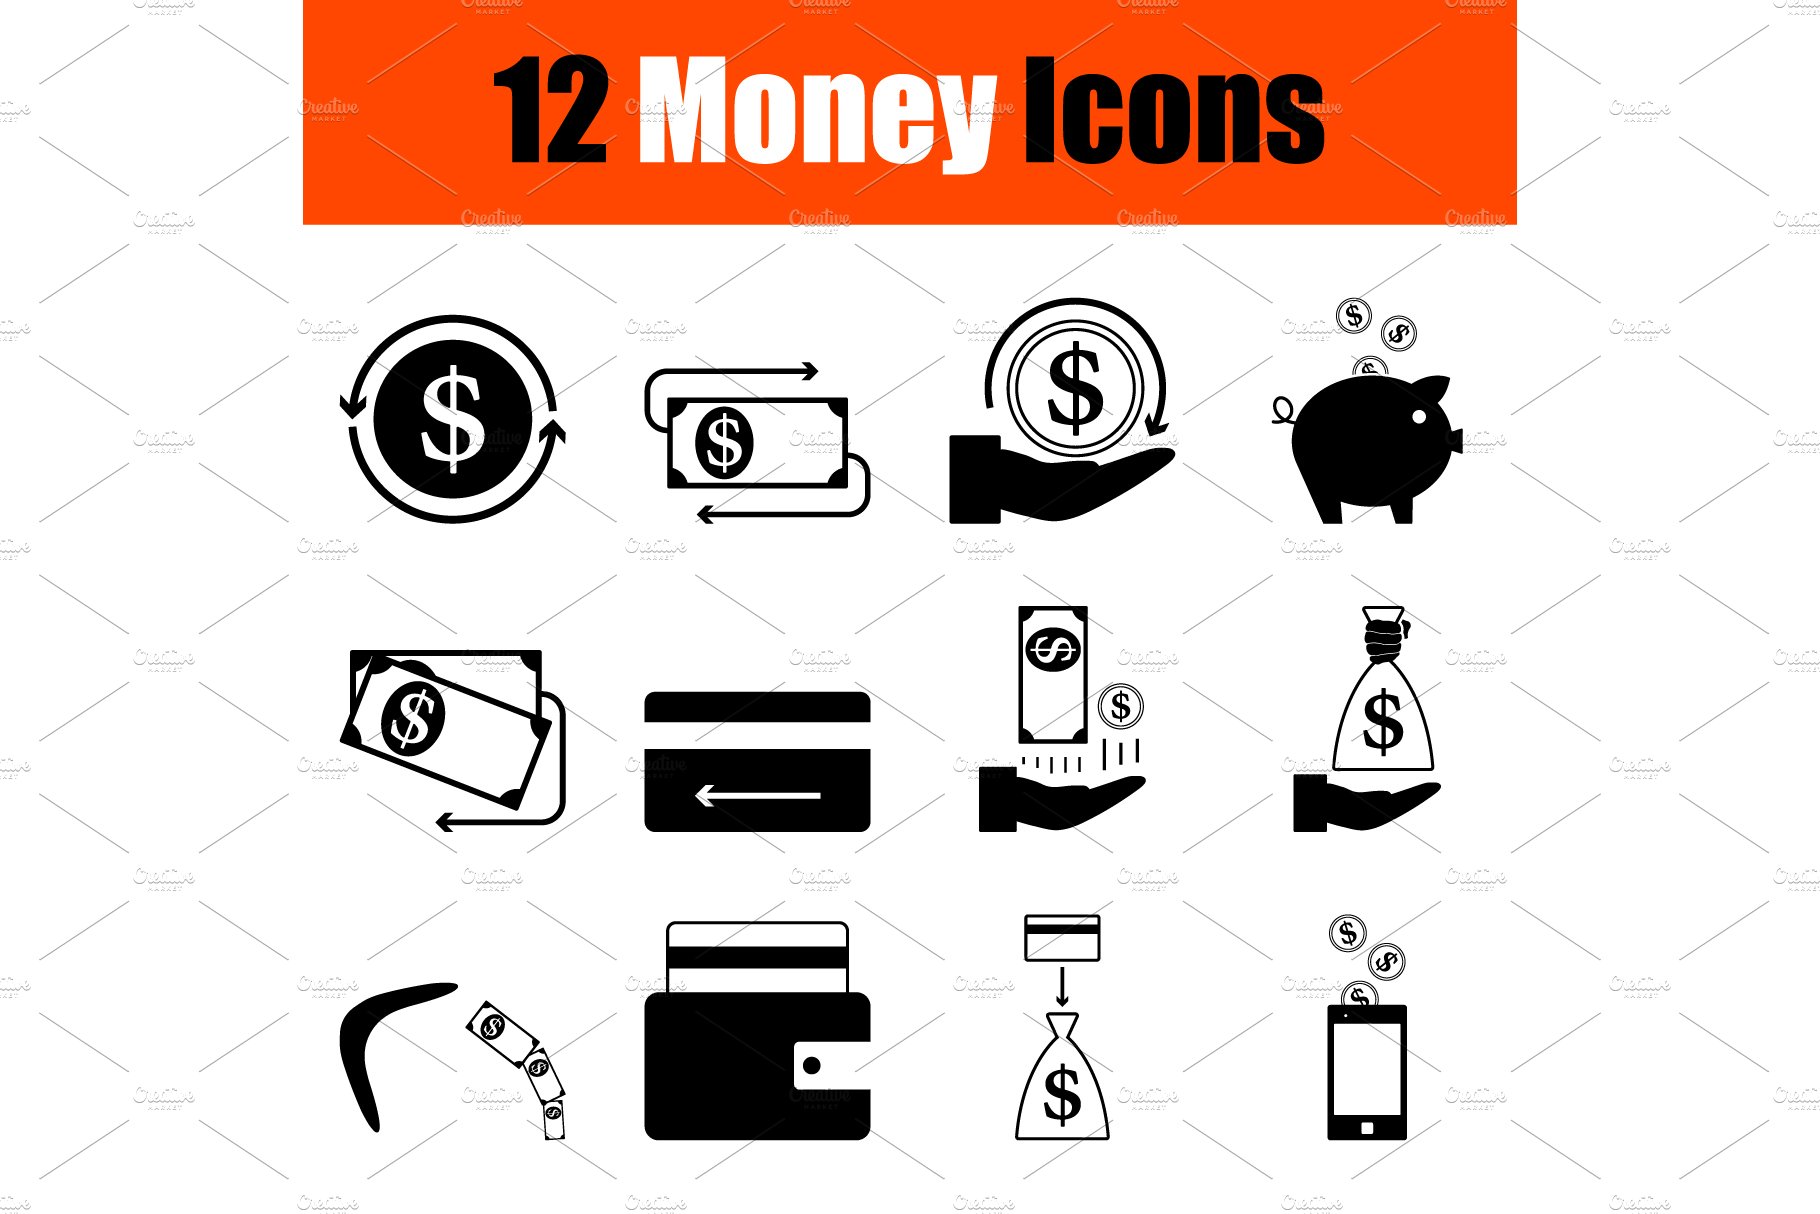 Money Icon Set cover image.